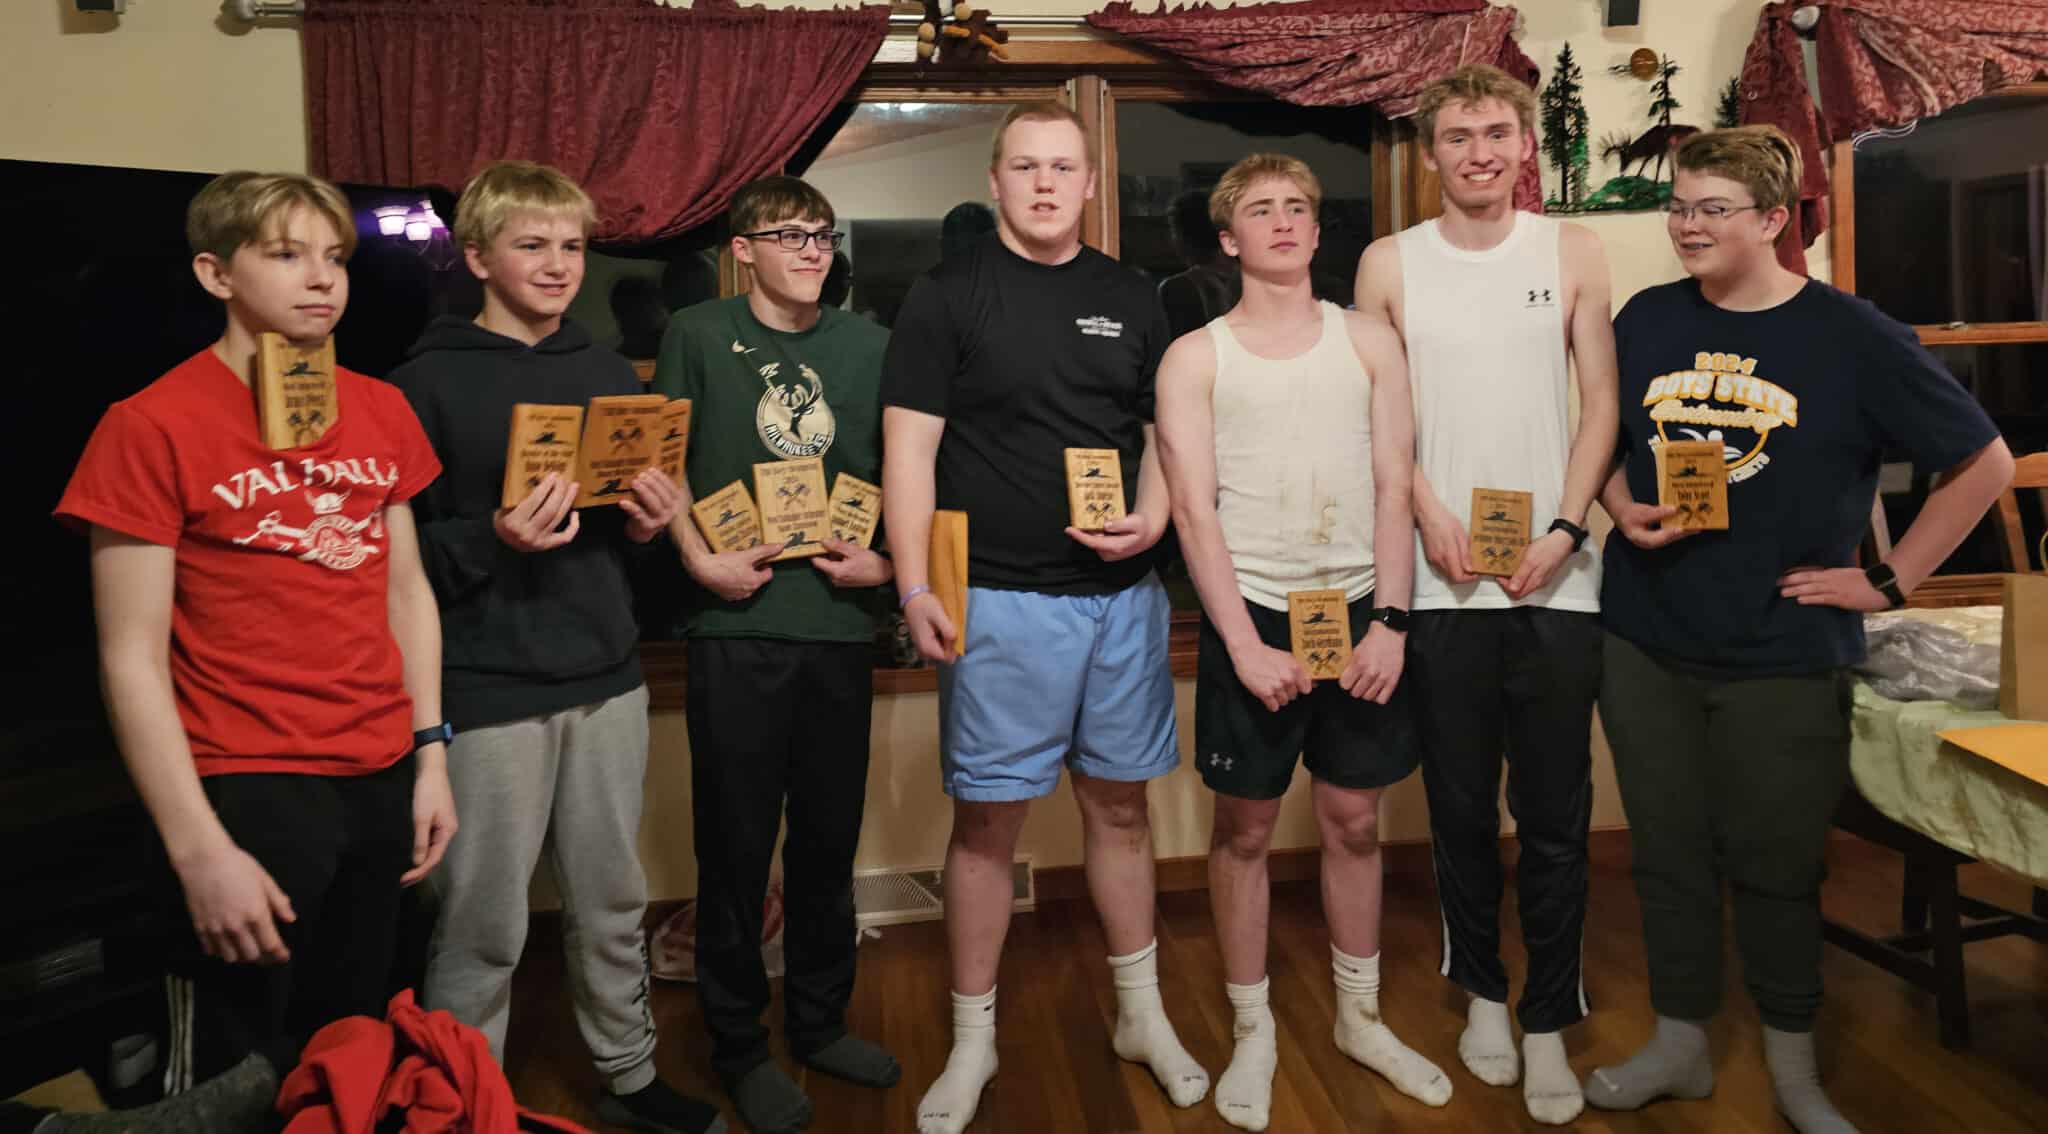 Boys’ swim team holds awards ceremony